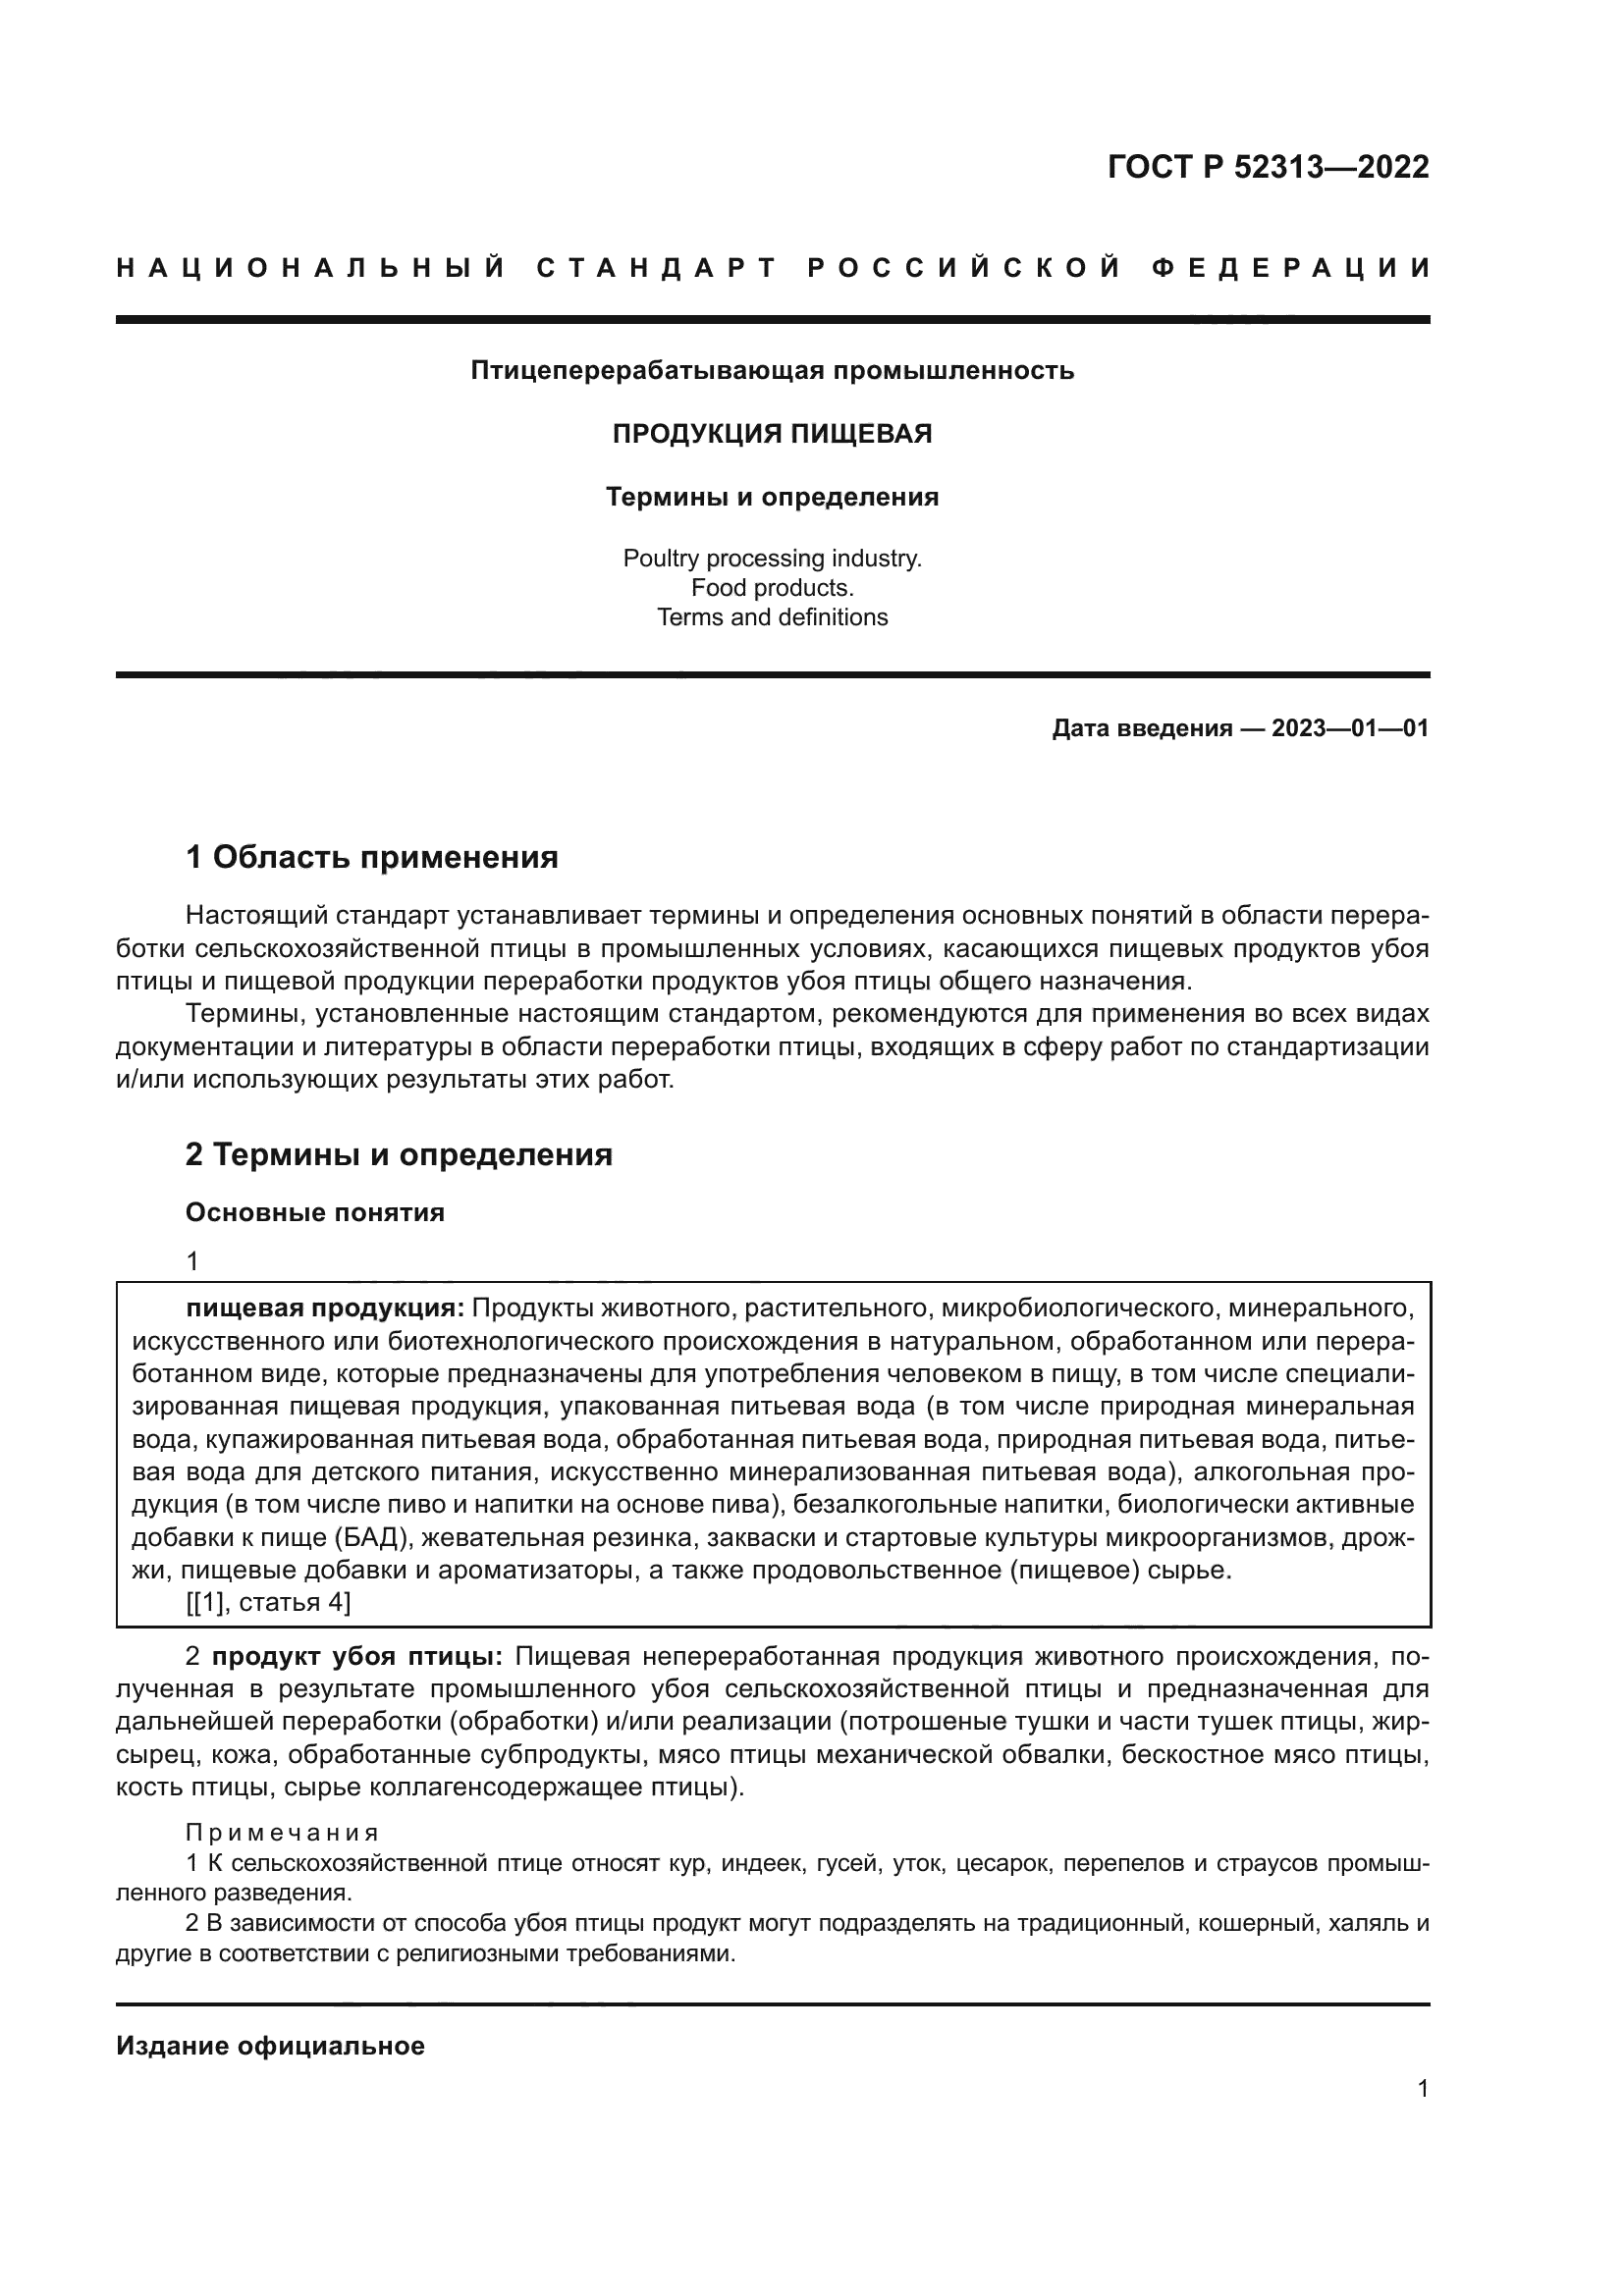 ГОСТ Р 52313-2022